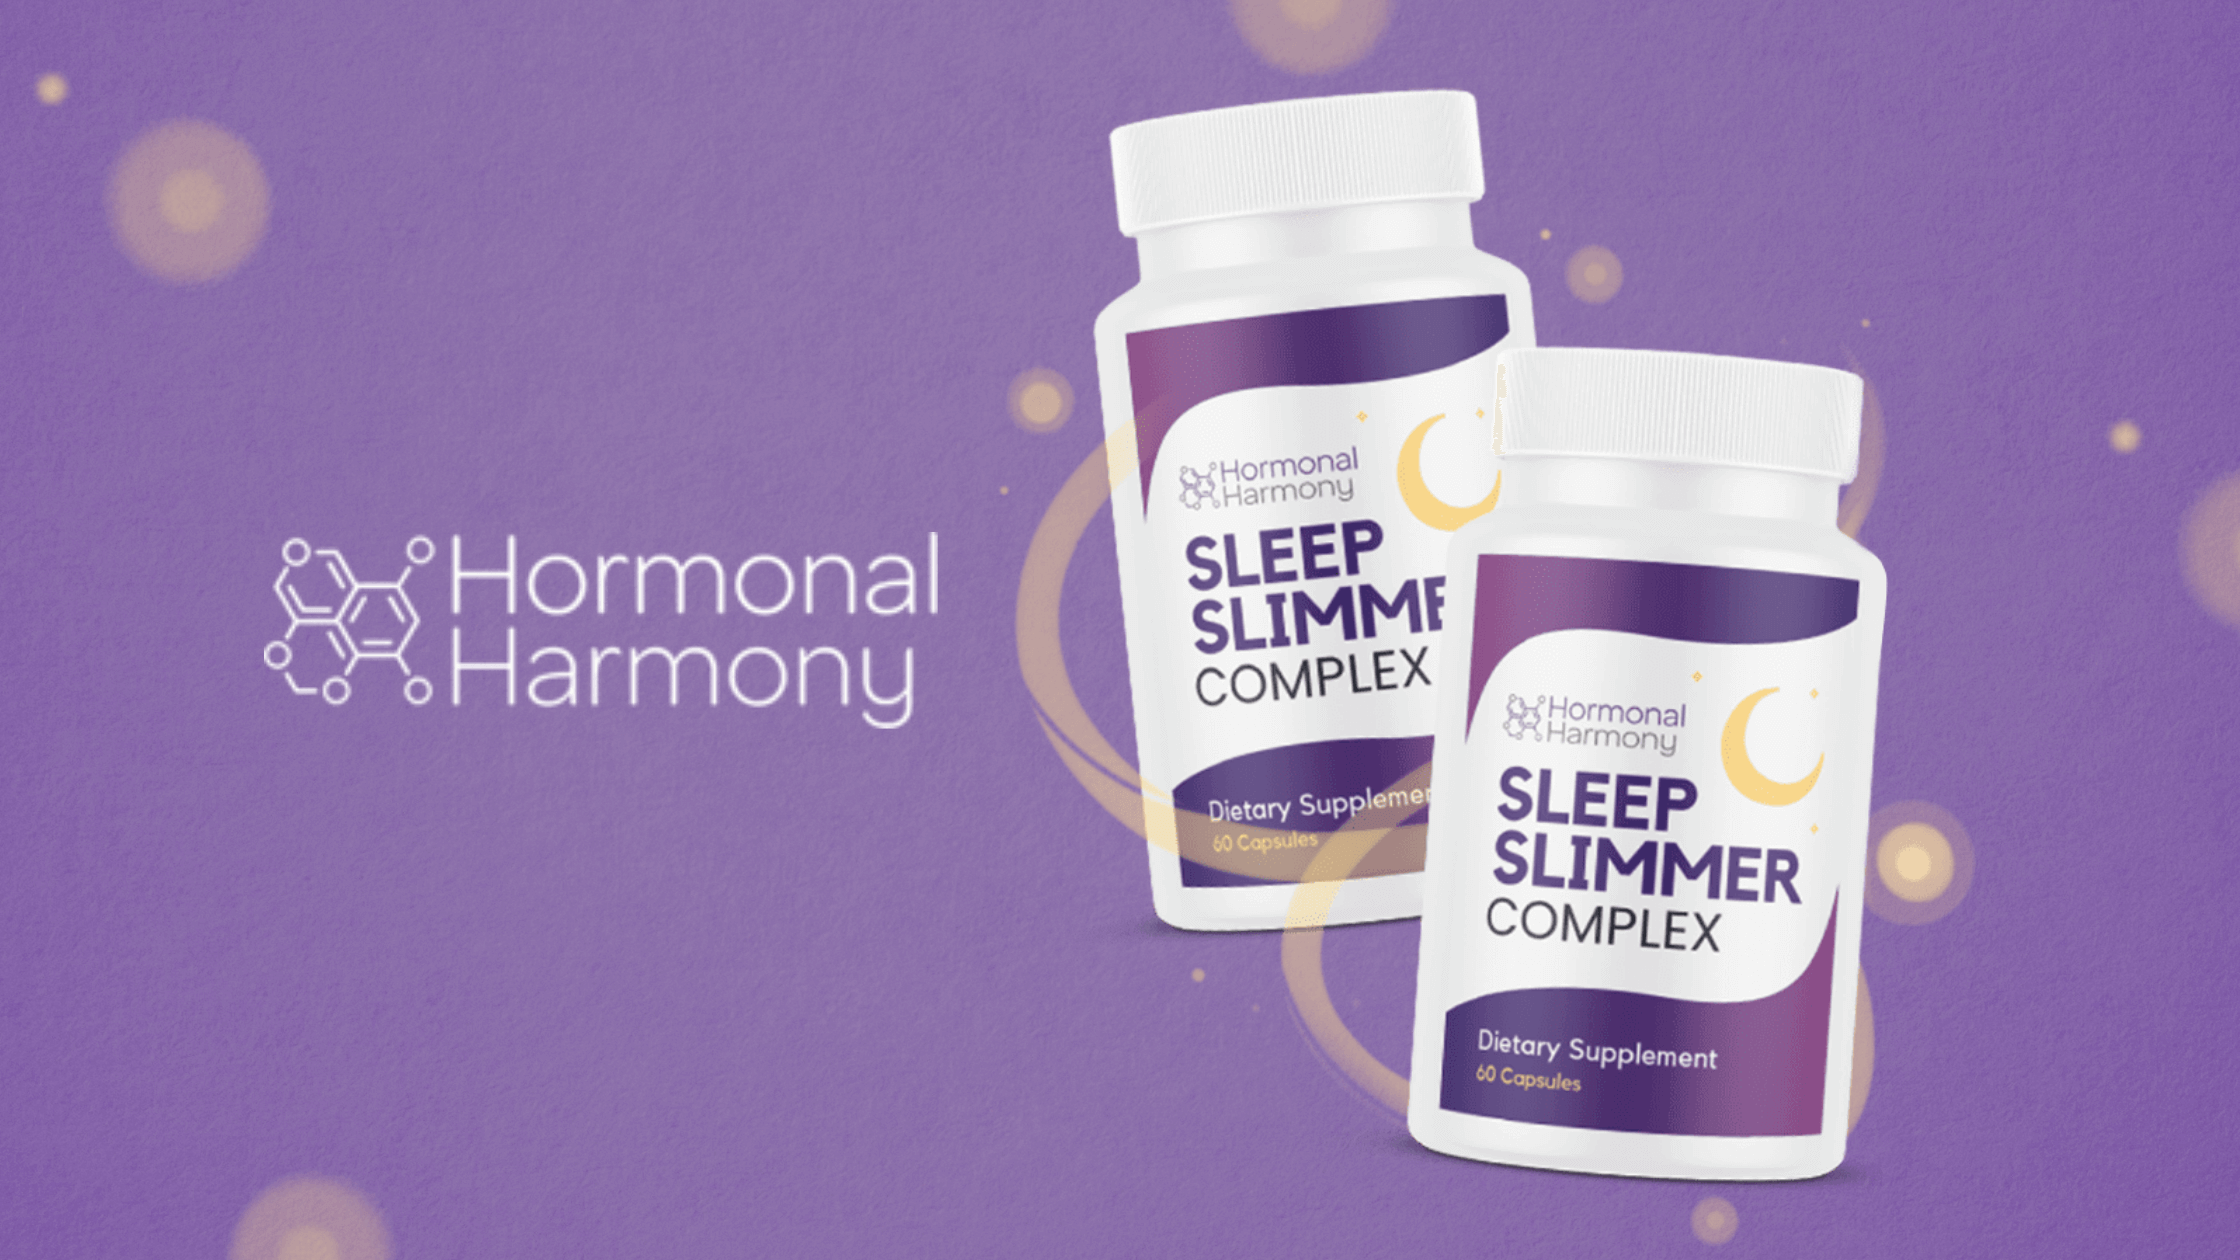 Hormonal Harmony Sleep Slimmer Complex Reviews